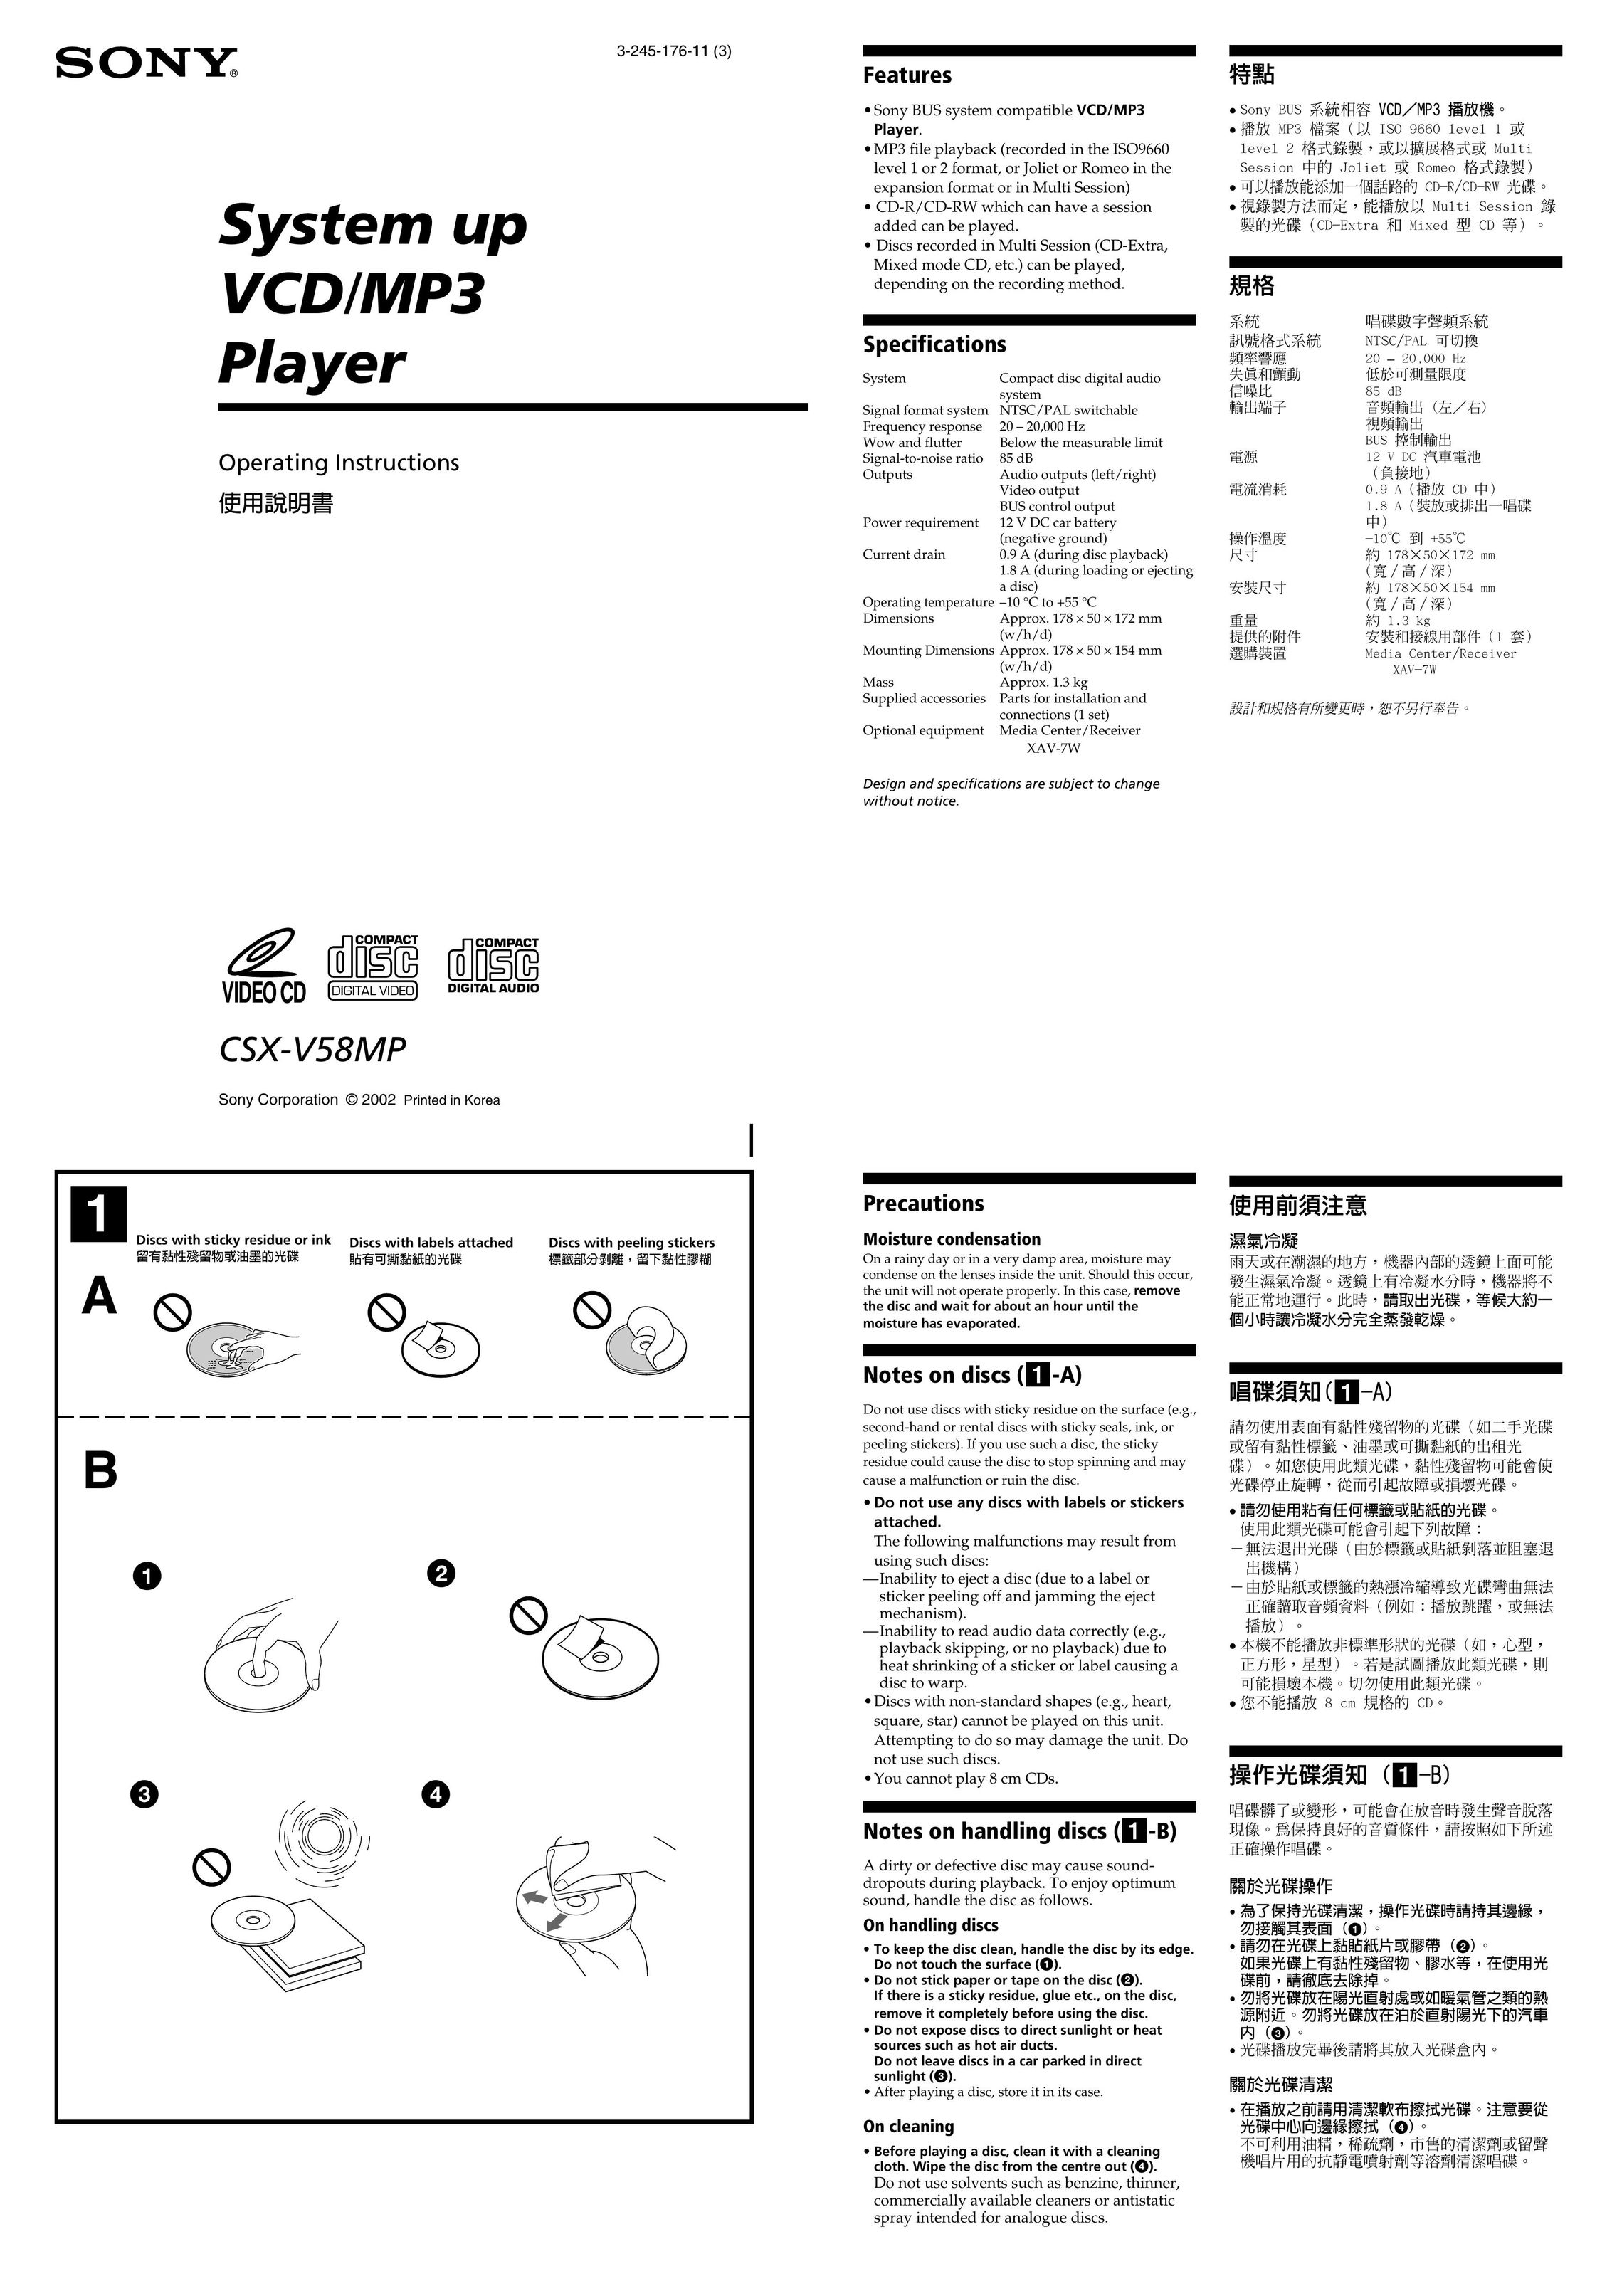 Sony CDX-V58MP MP3 Player User Manual